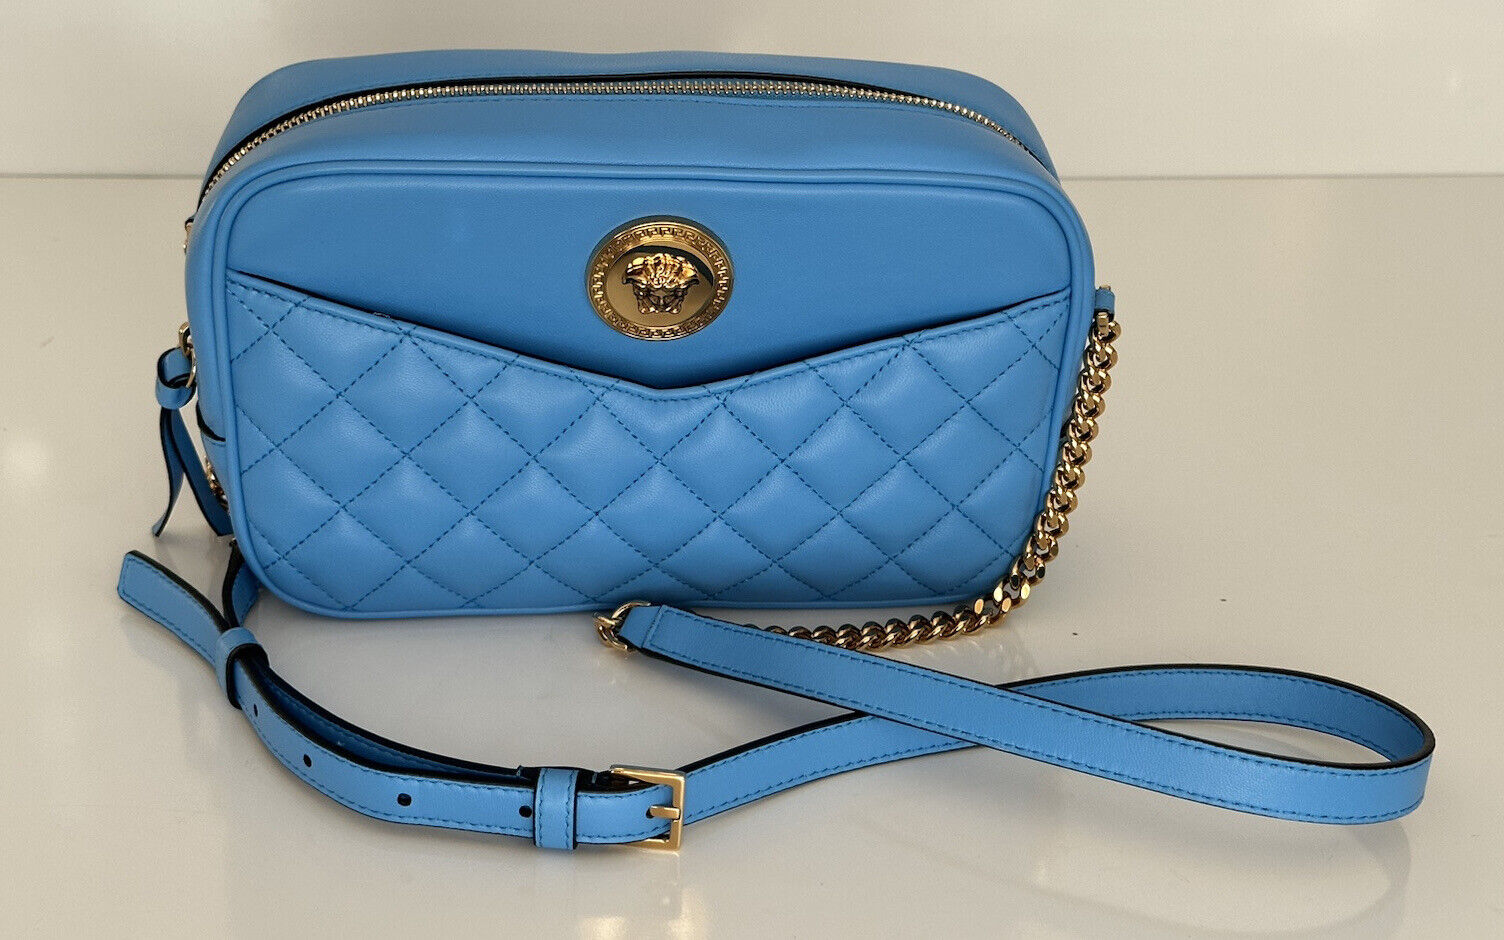 NWT $1275 Versace Стеганая кожаная сумка ягненка, синяя, средняя сумка на плечо 1008828 Италия 